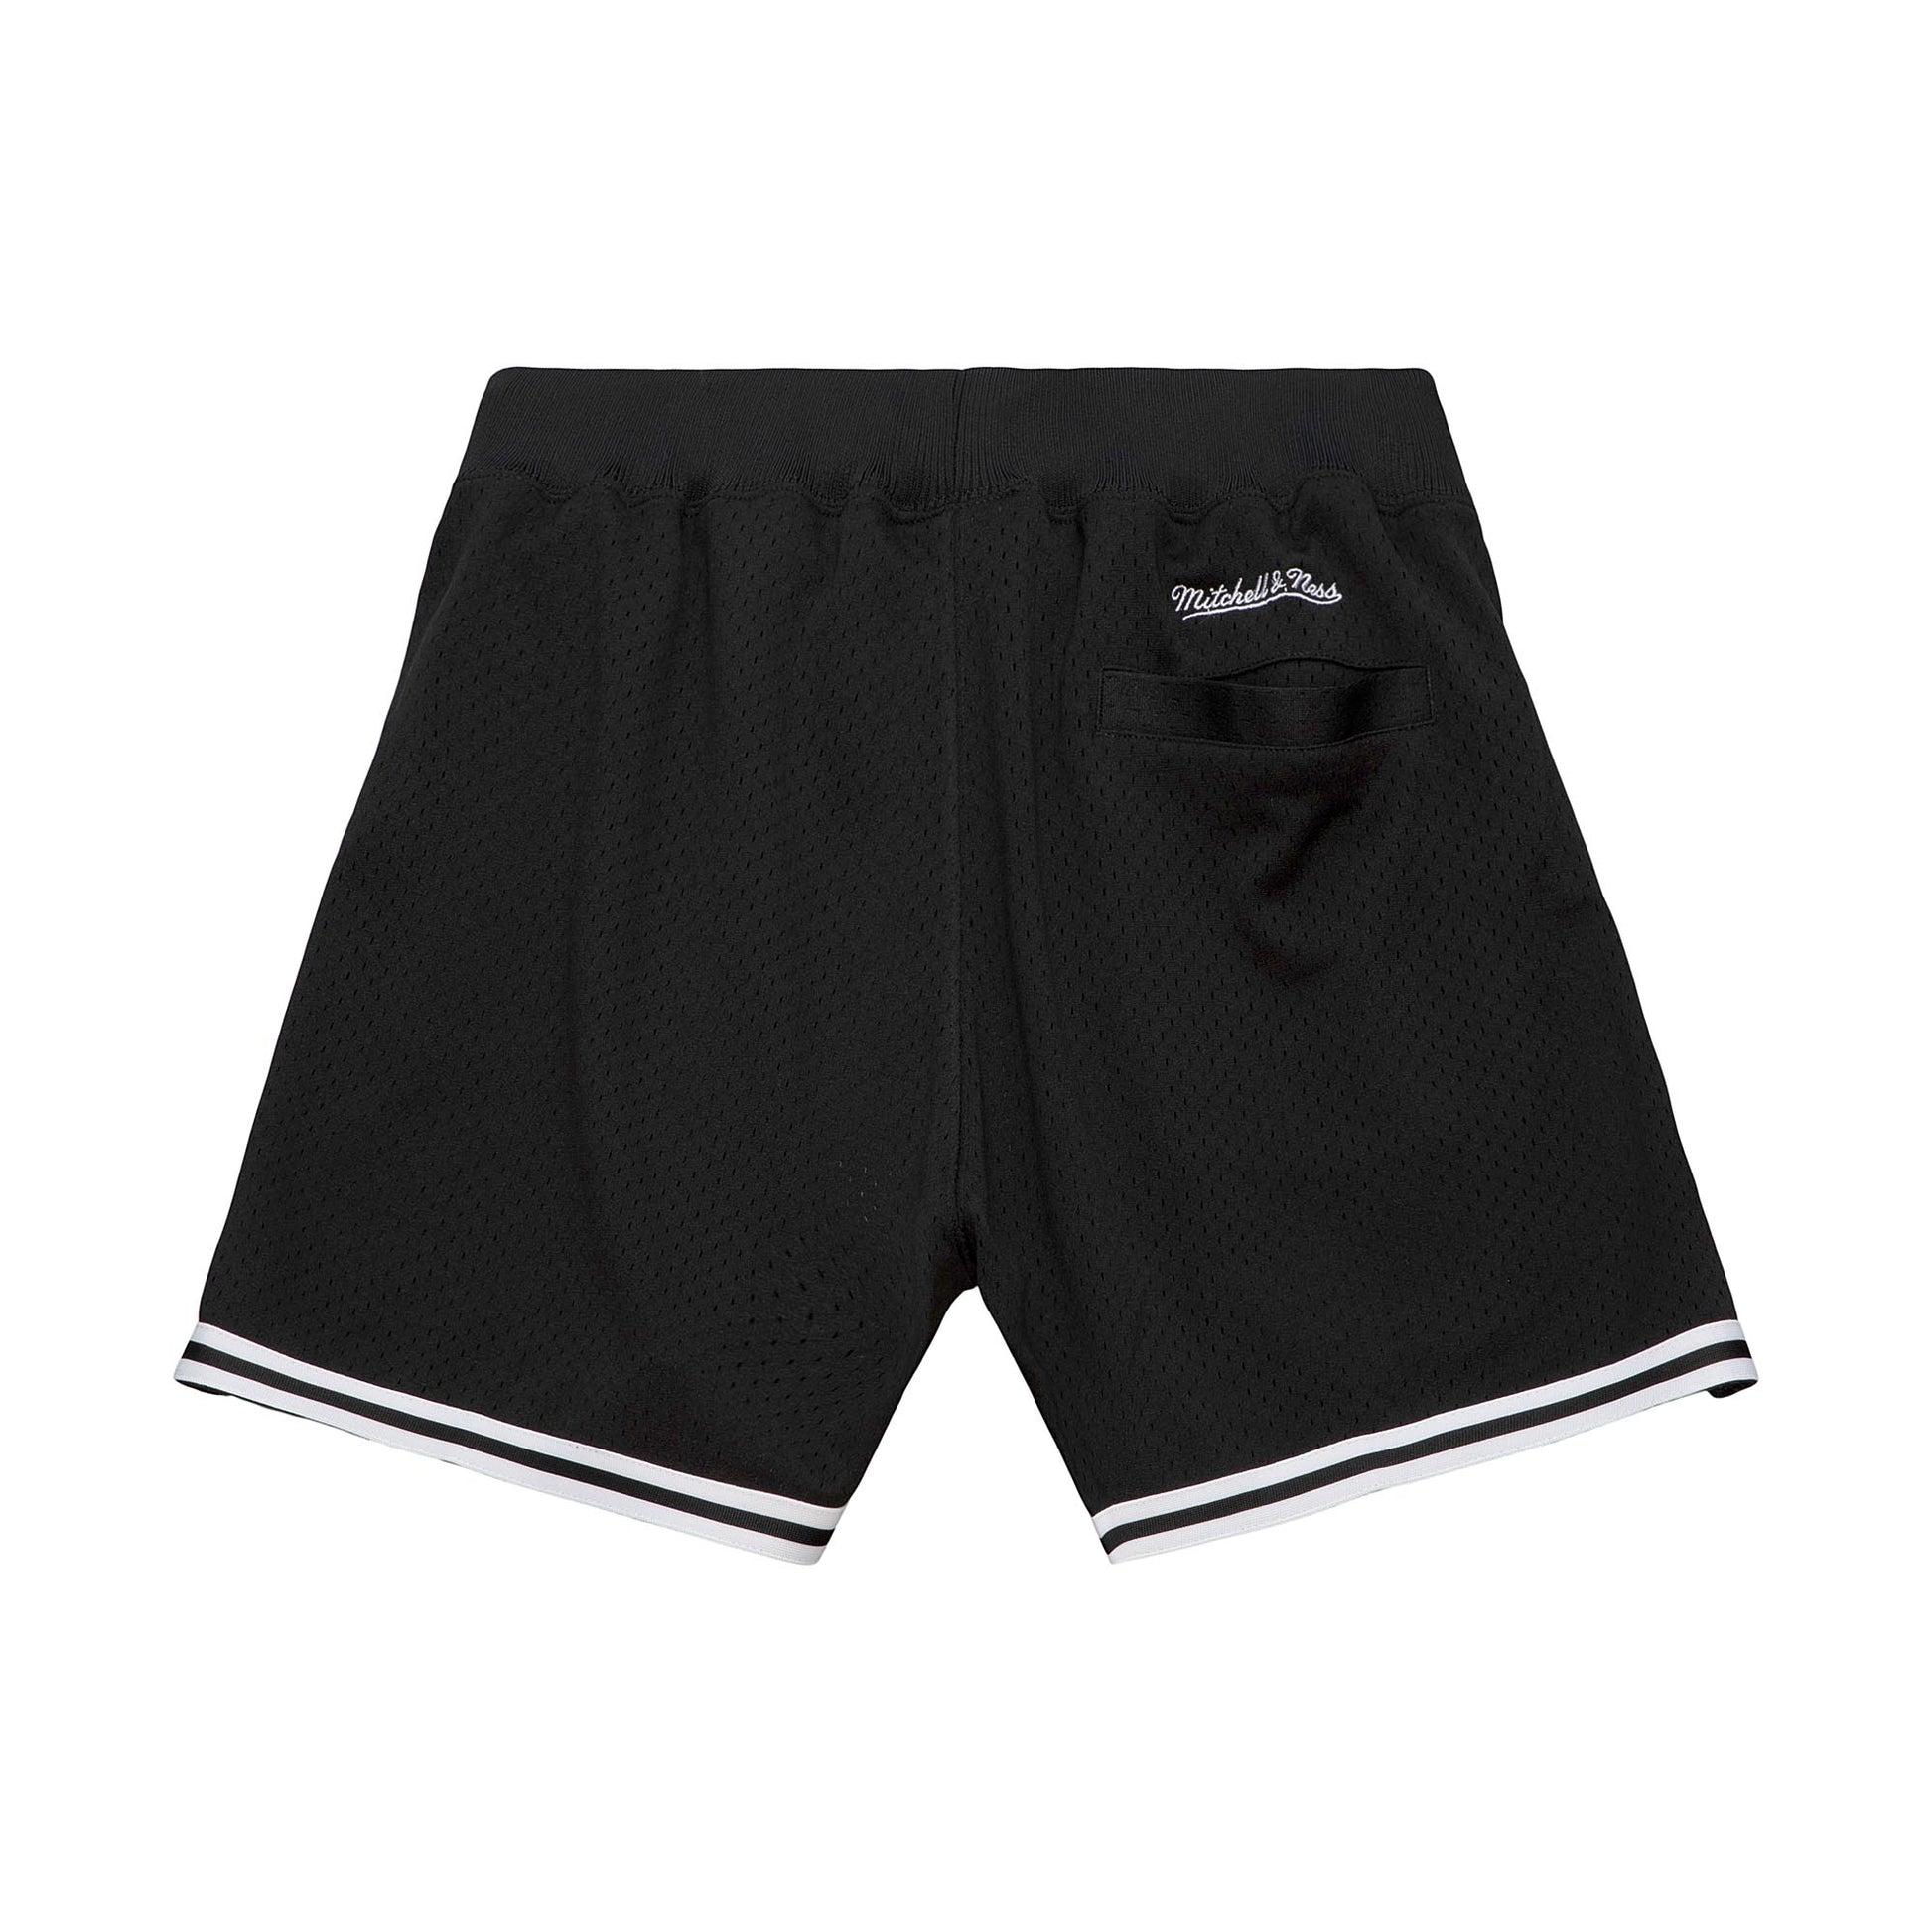 Game Day 2.0 Shorts - Own Brand Black/White